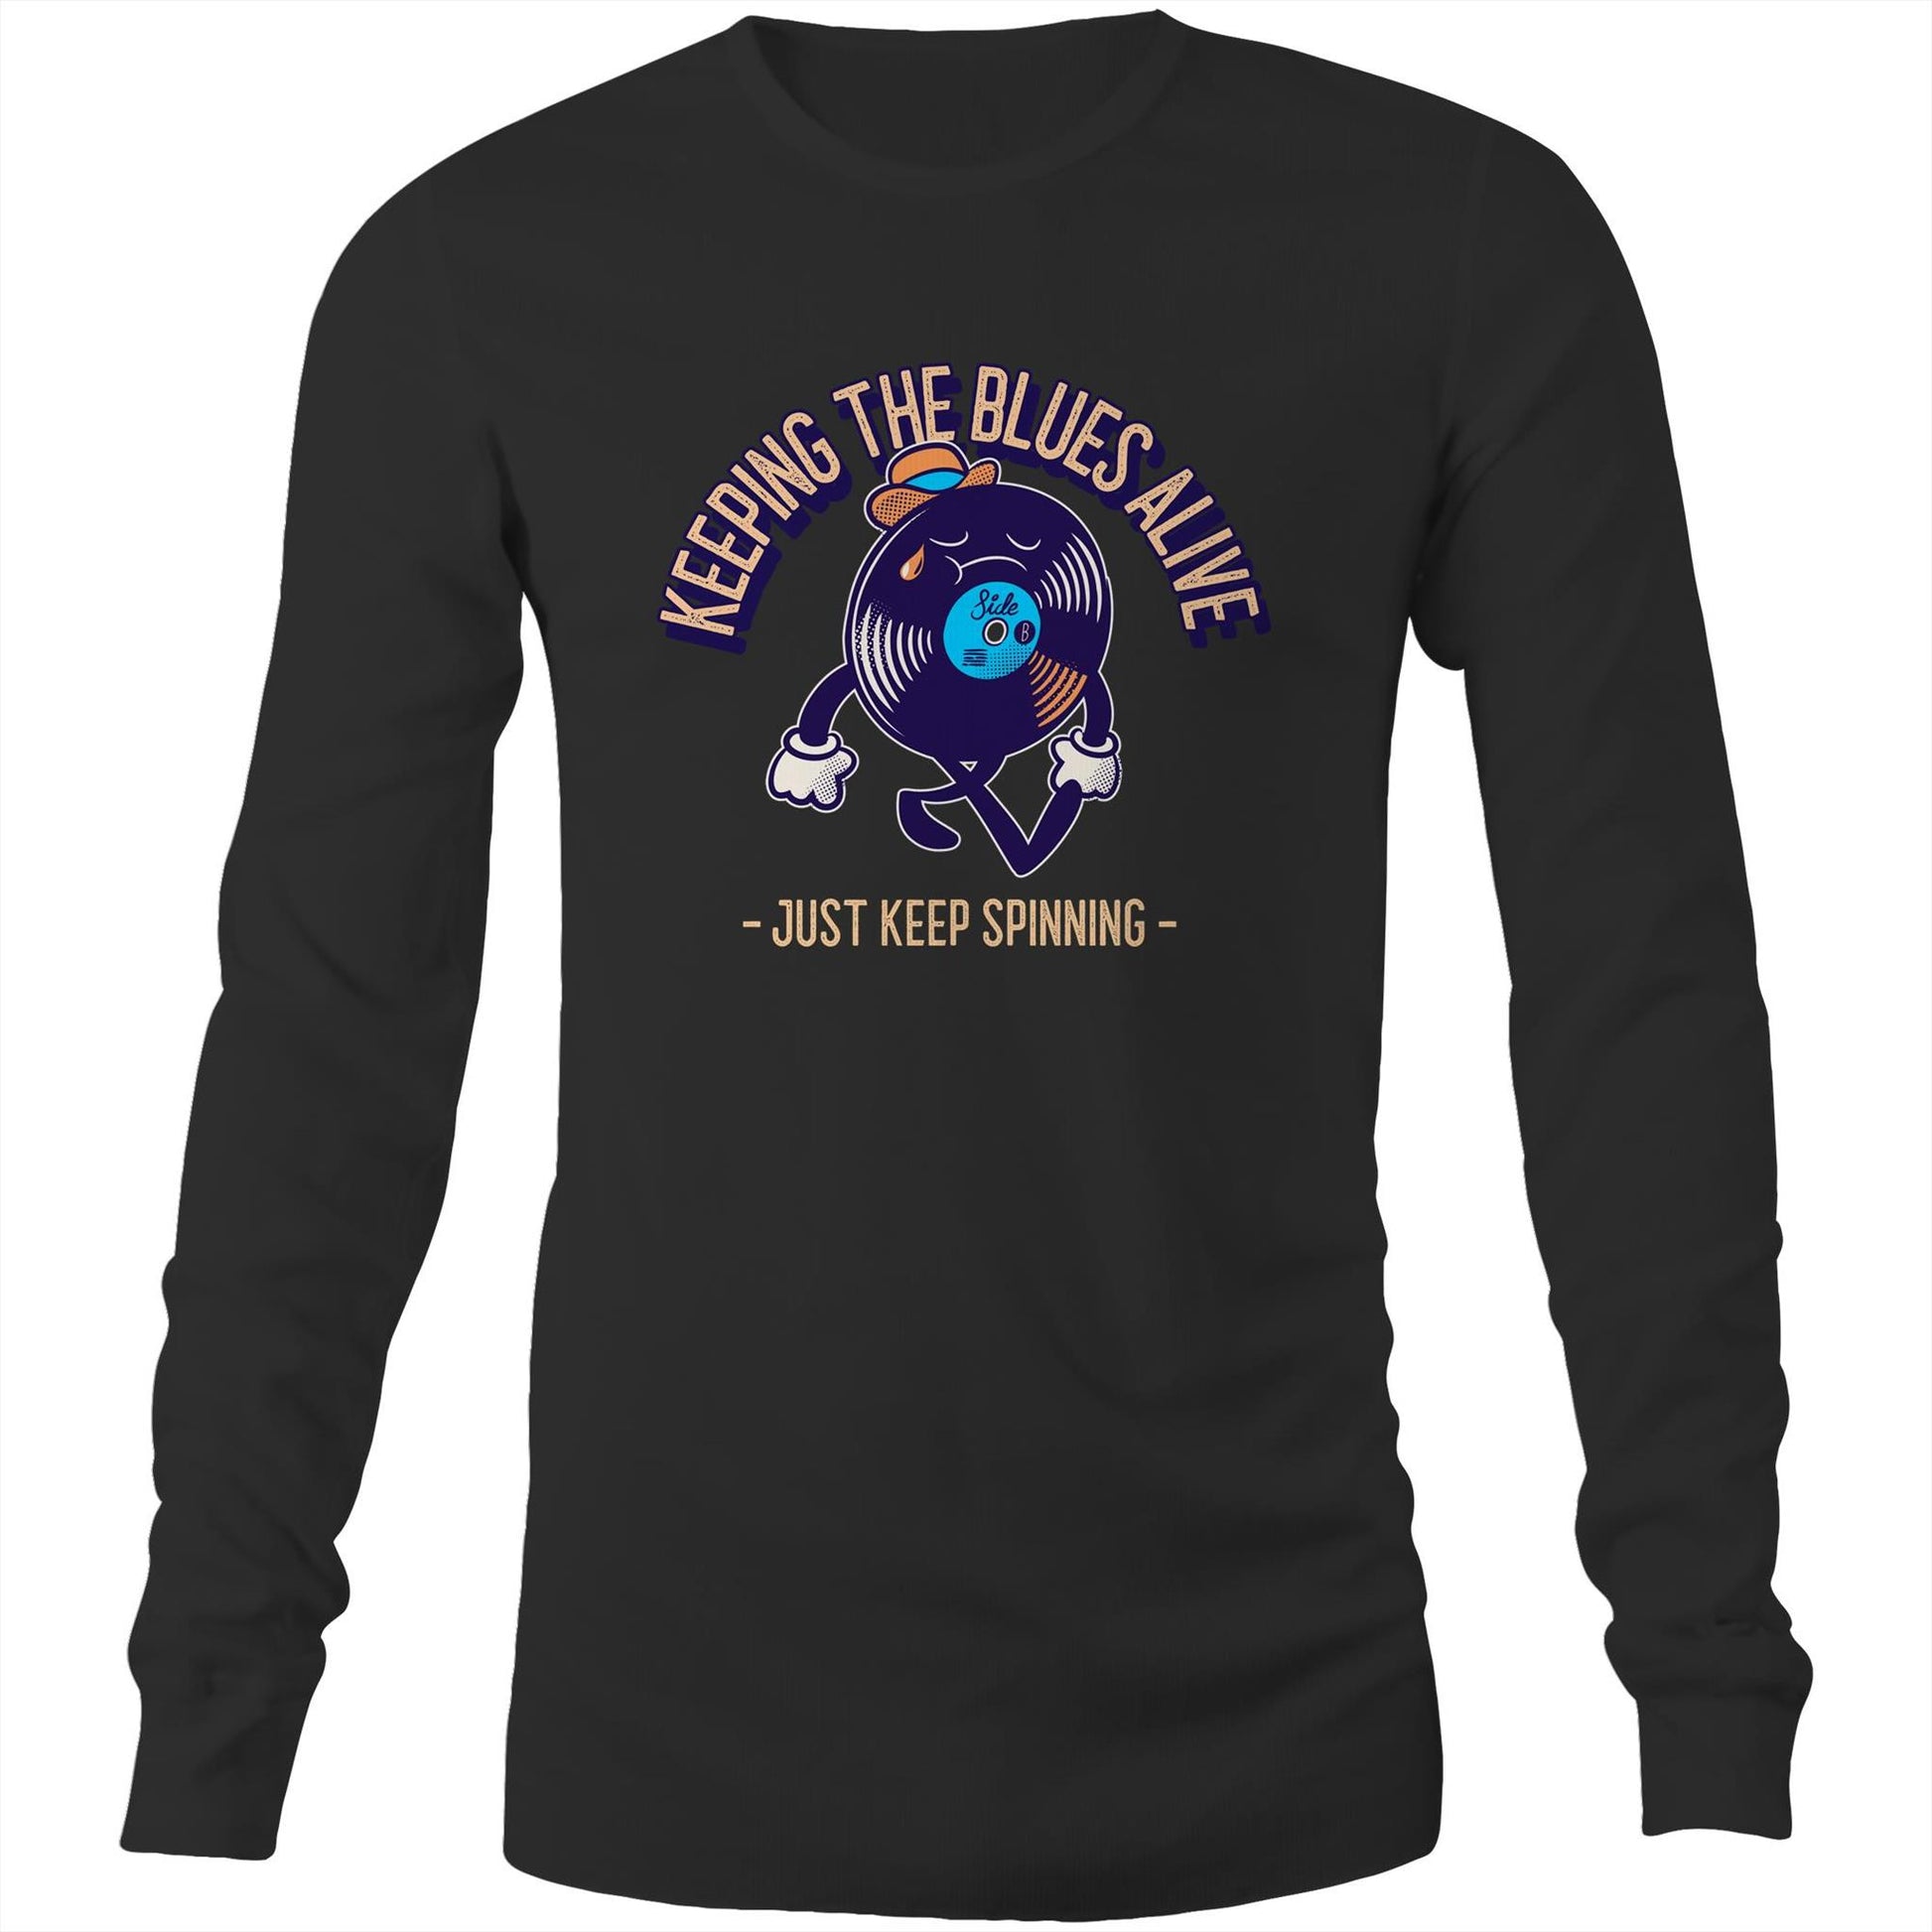 Keeping The Blues Alive - Long Sleeve T-Shirt Black Unisex Long Sleeve T-shirt Music